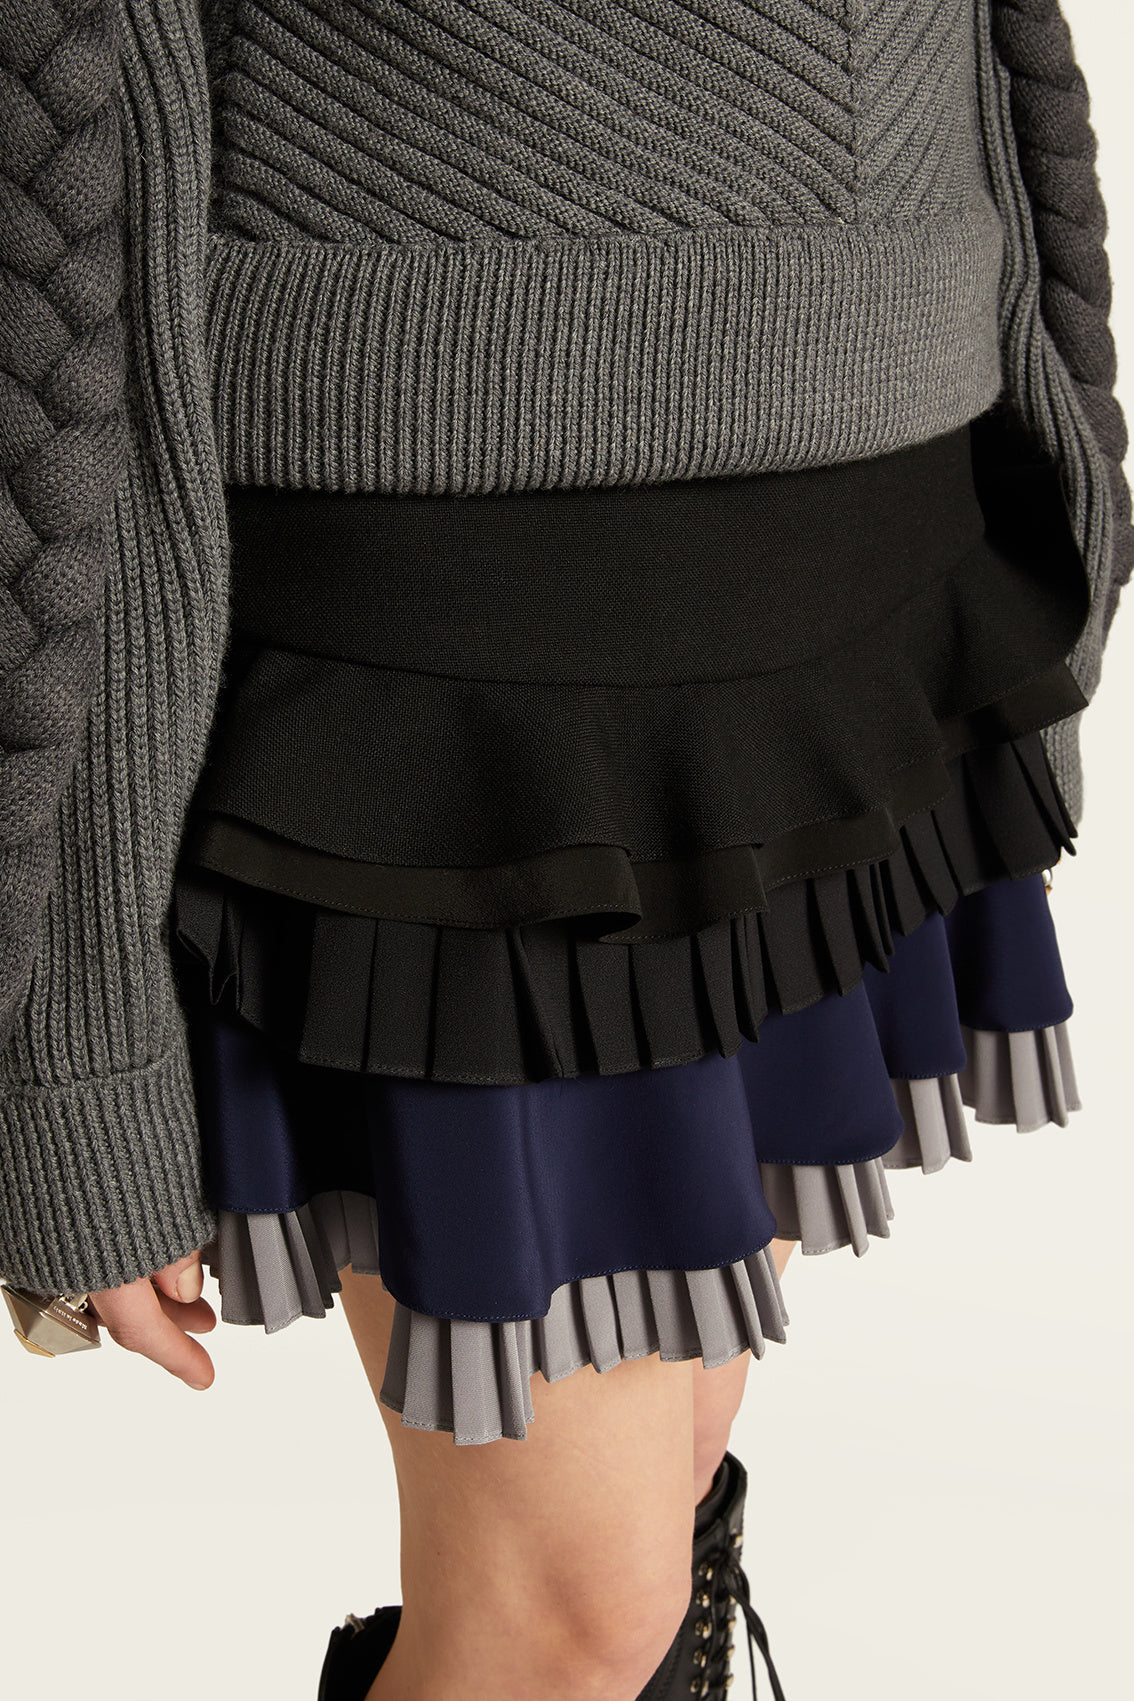 Black & Blue Multi-Pleat Layered Mini Skirt